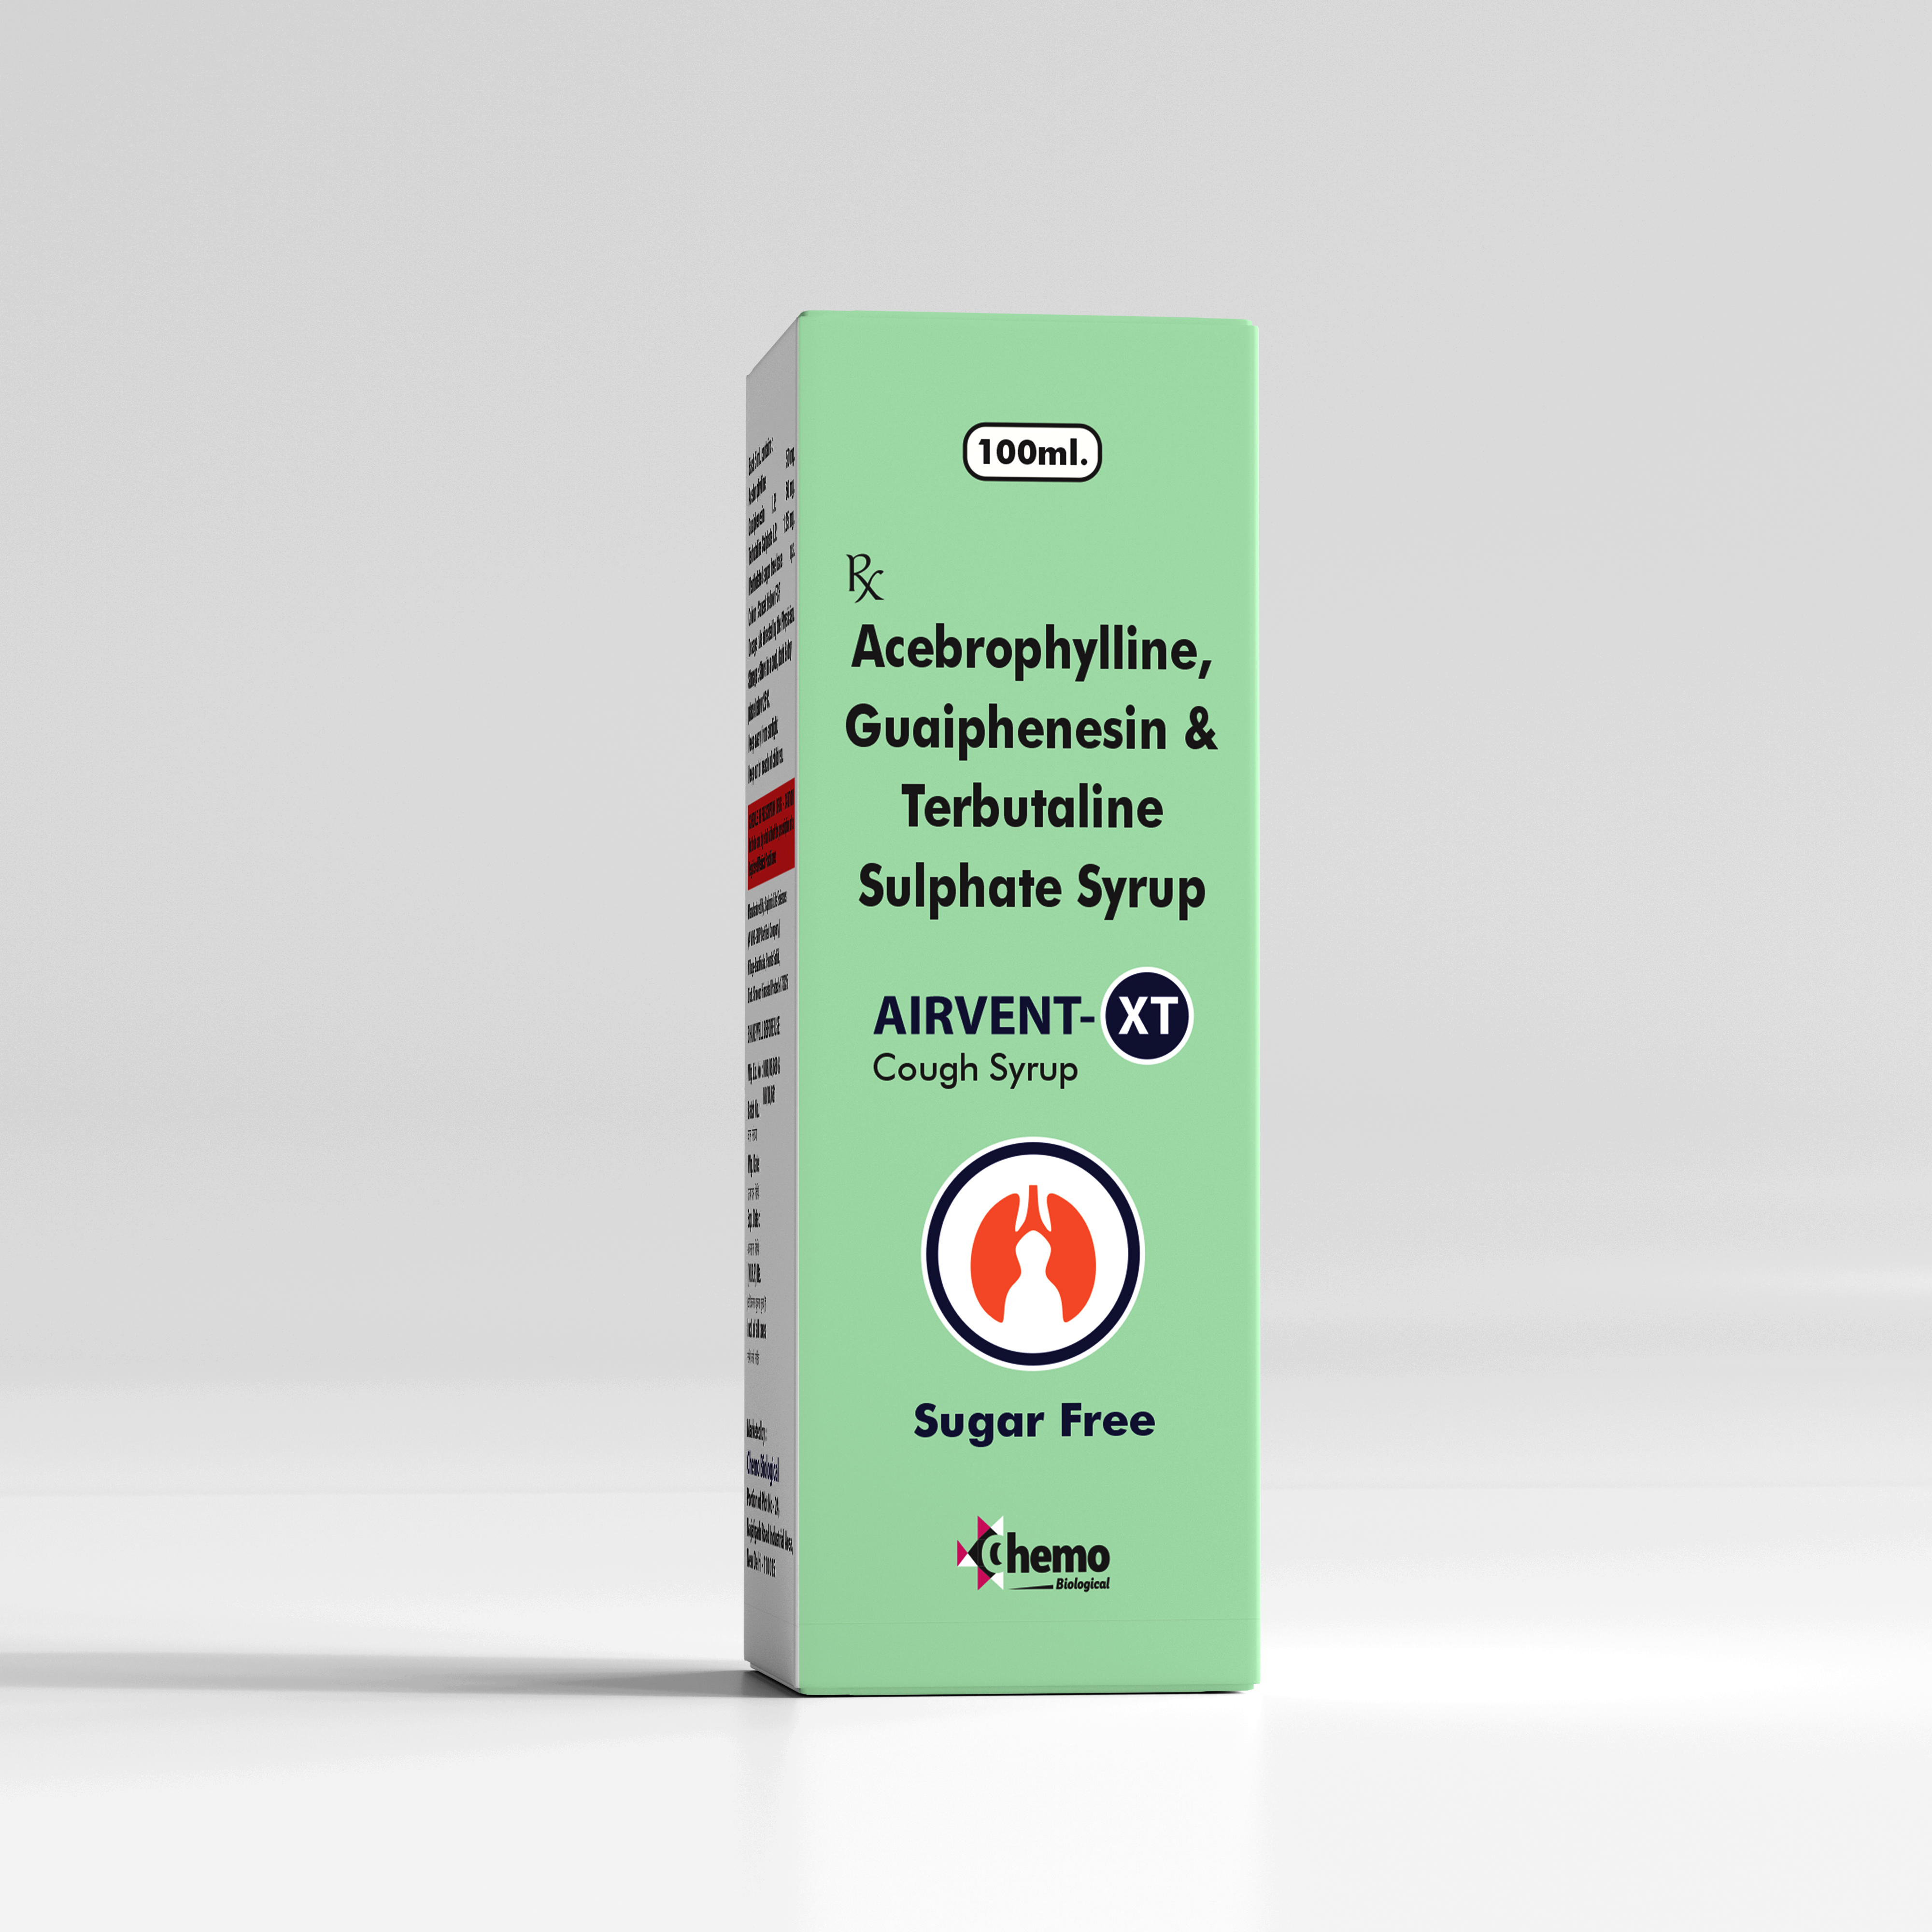 acebrophyline 50 mg + guaiphenesin 50 mg + terbutaline 1.25 mg